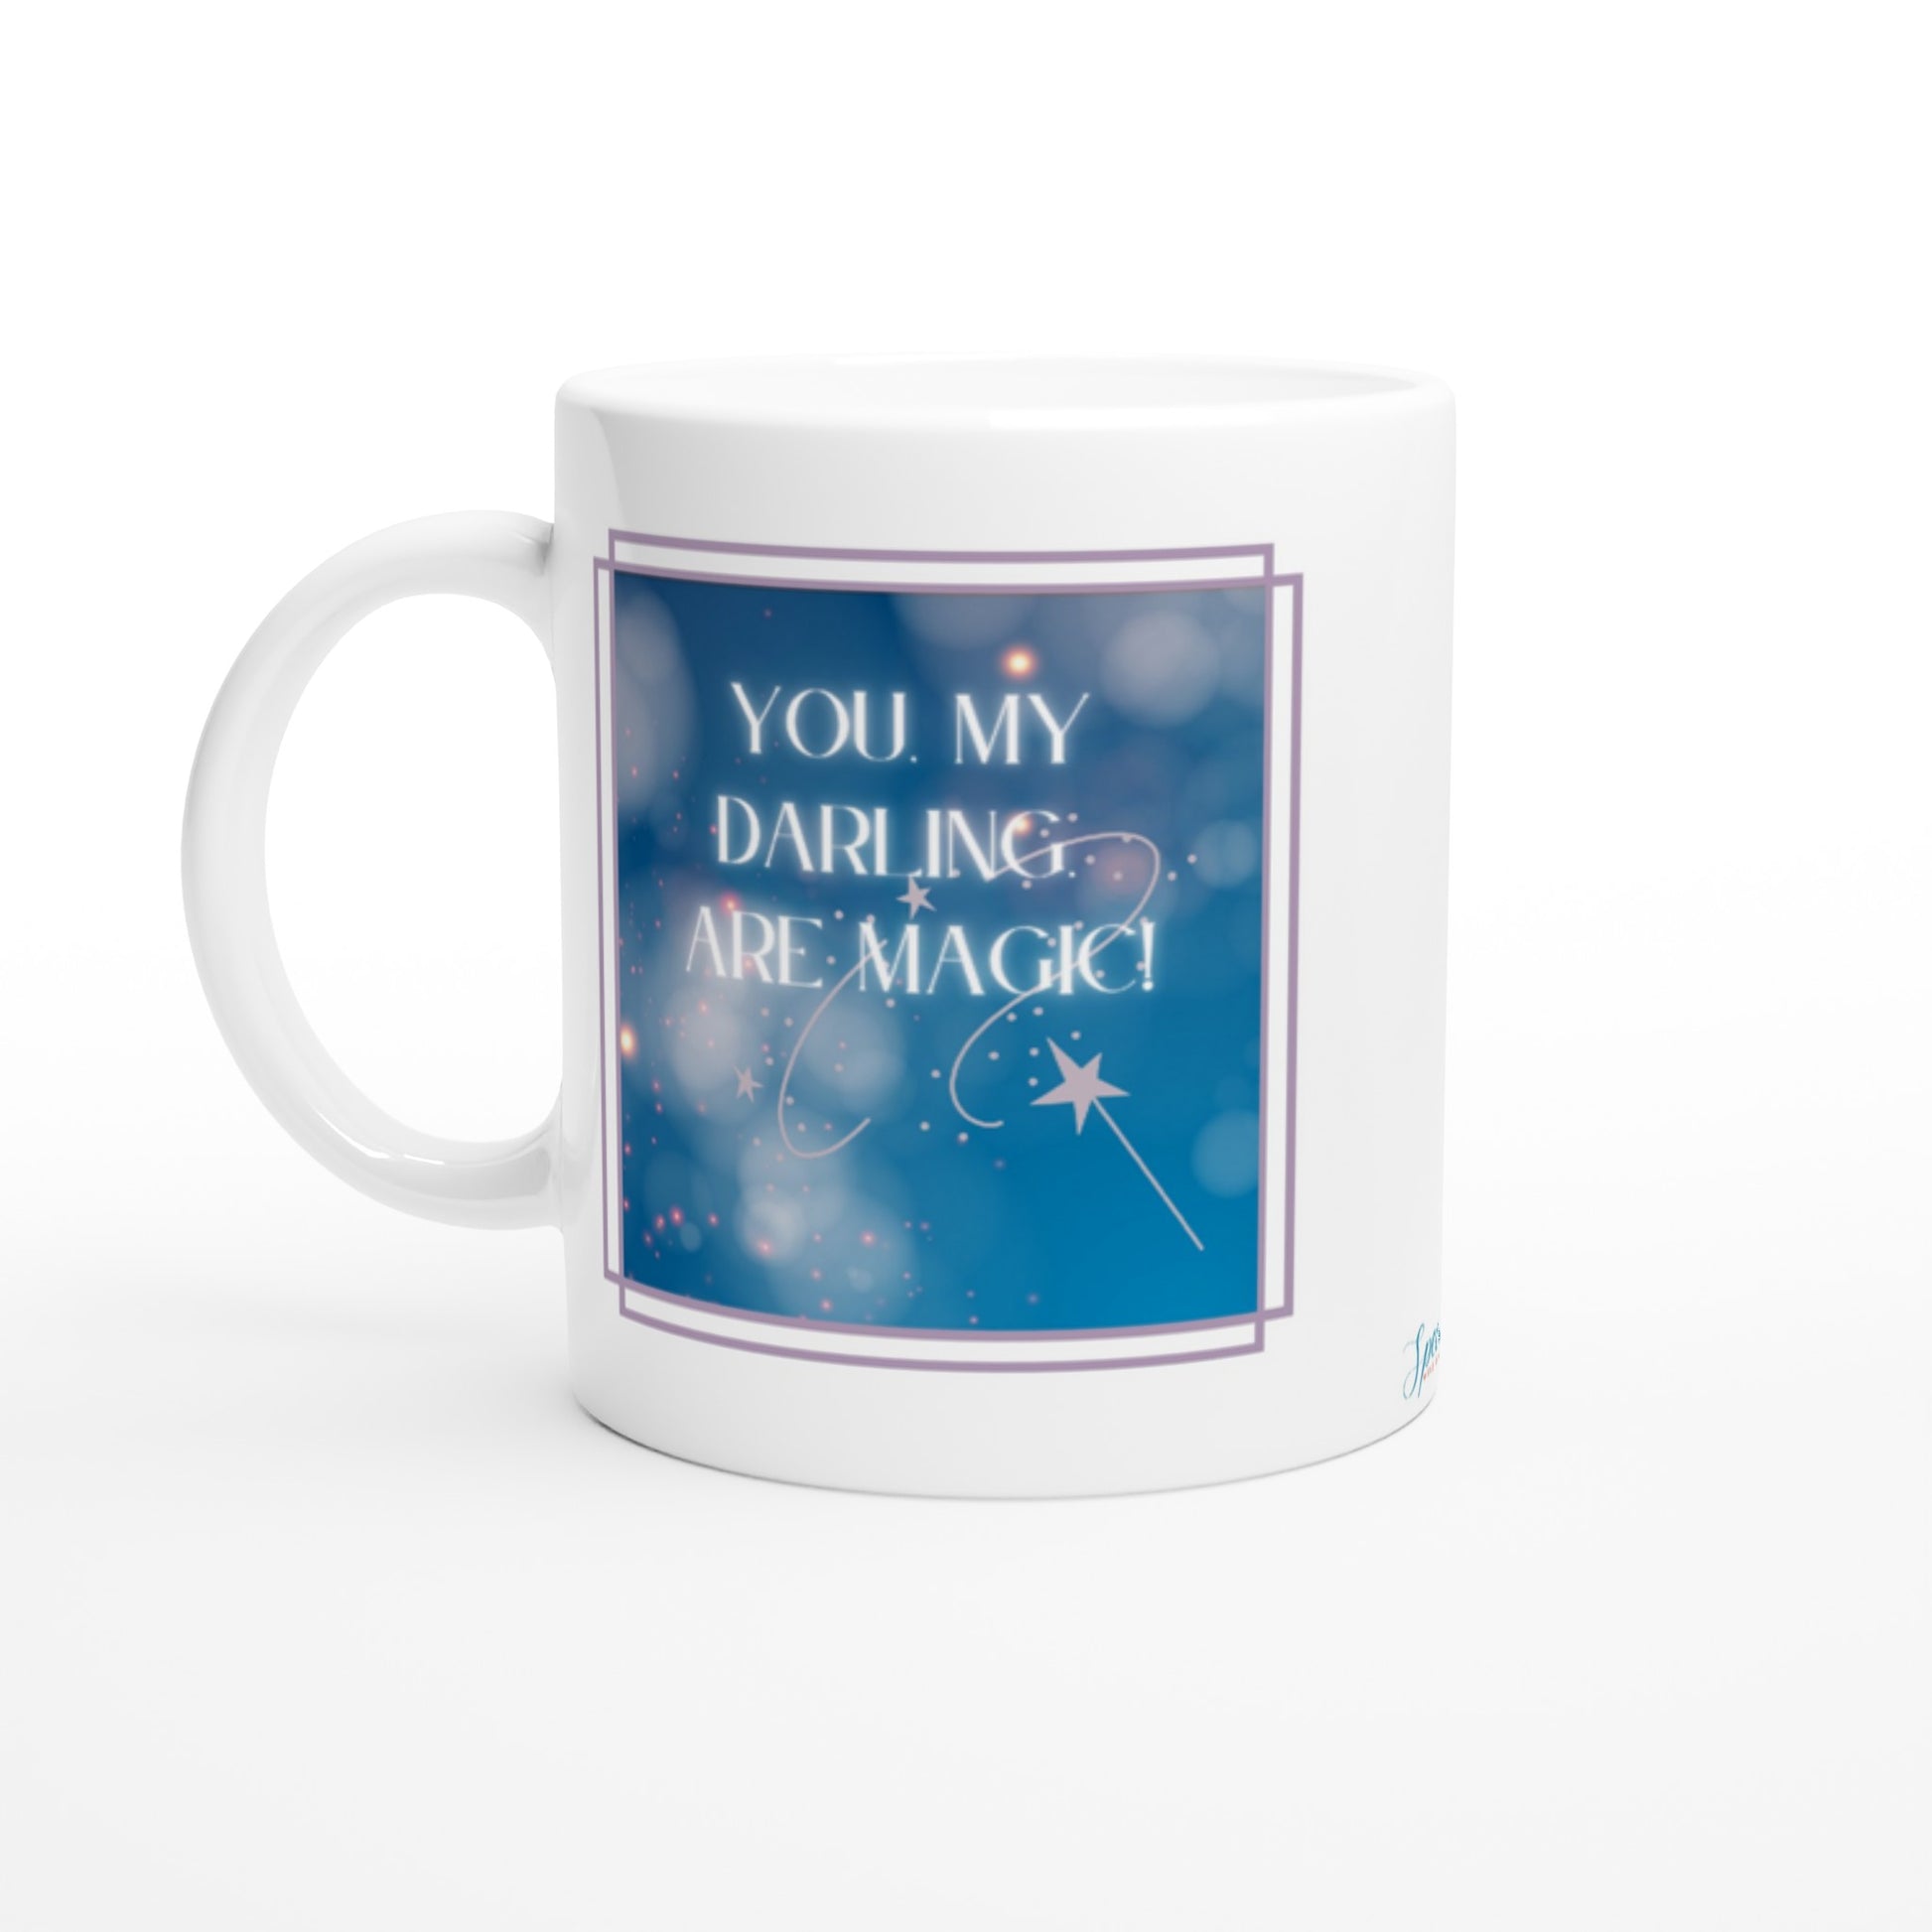 "You, my darling, are magic!" 11 oz. Mug front view